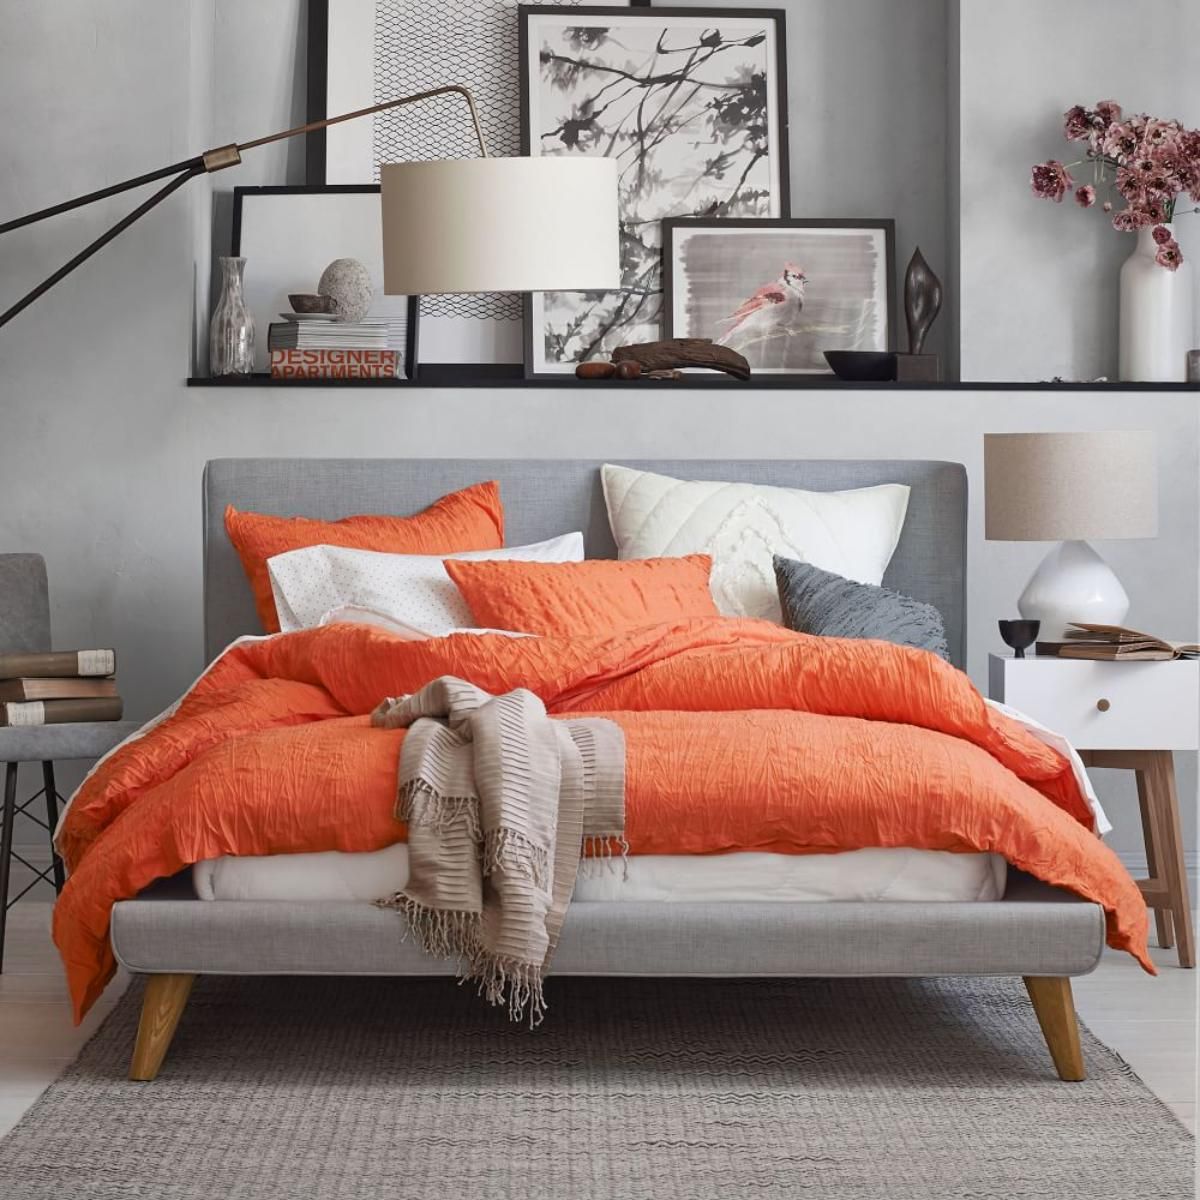 Create a Scandinavian Style Orange Bedroom